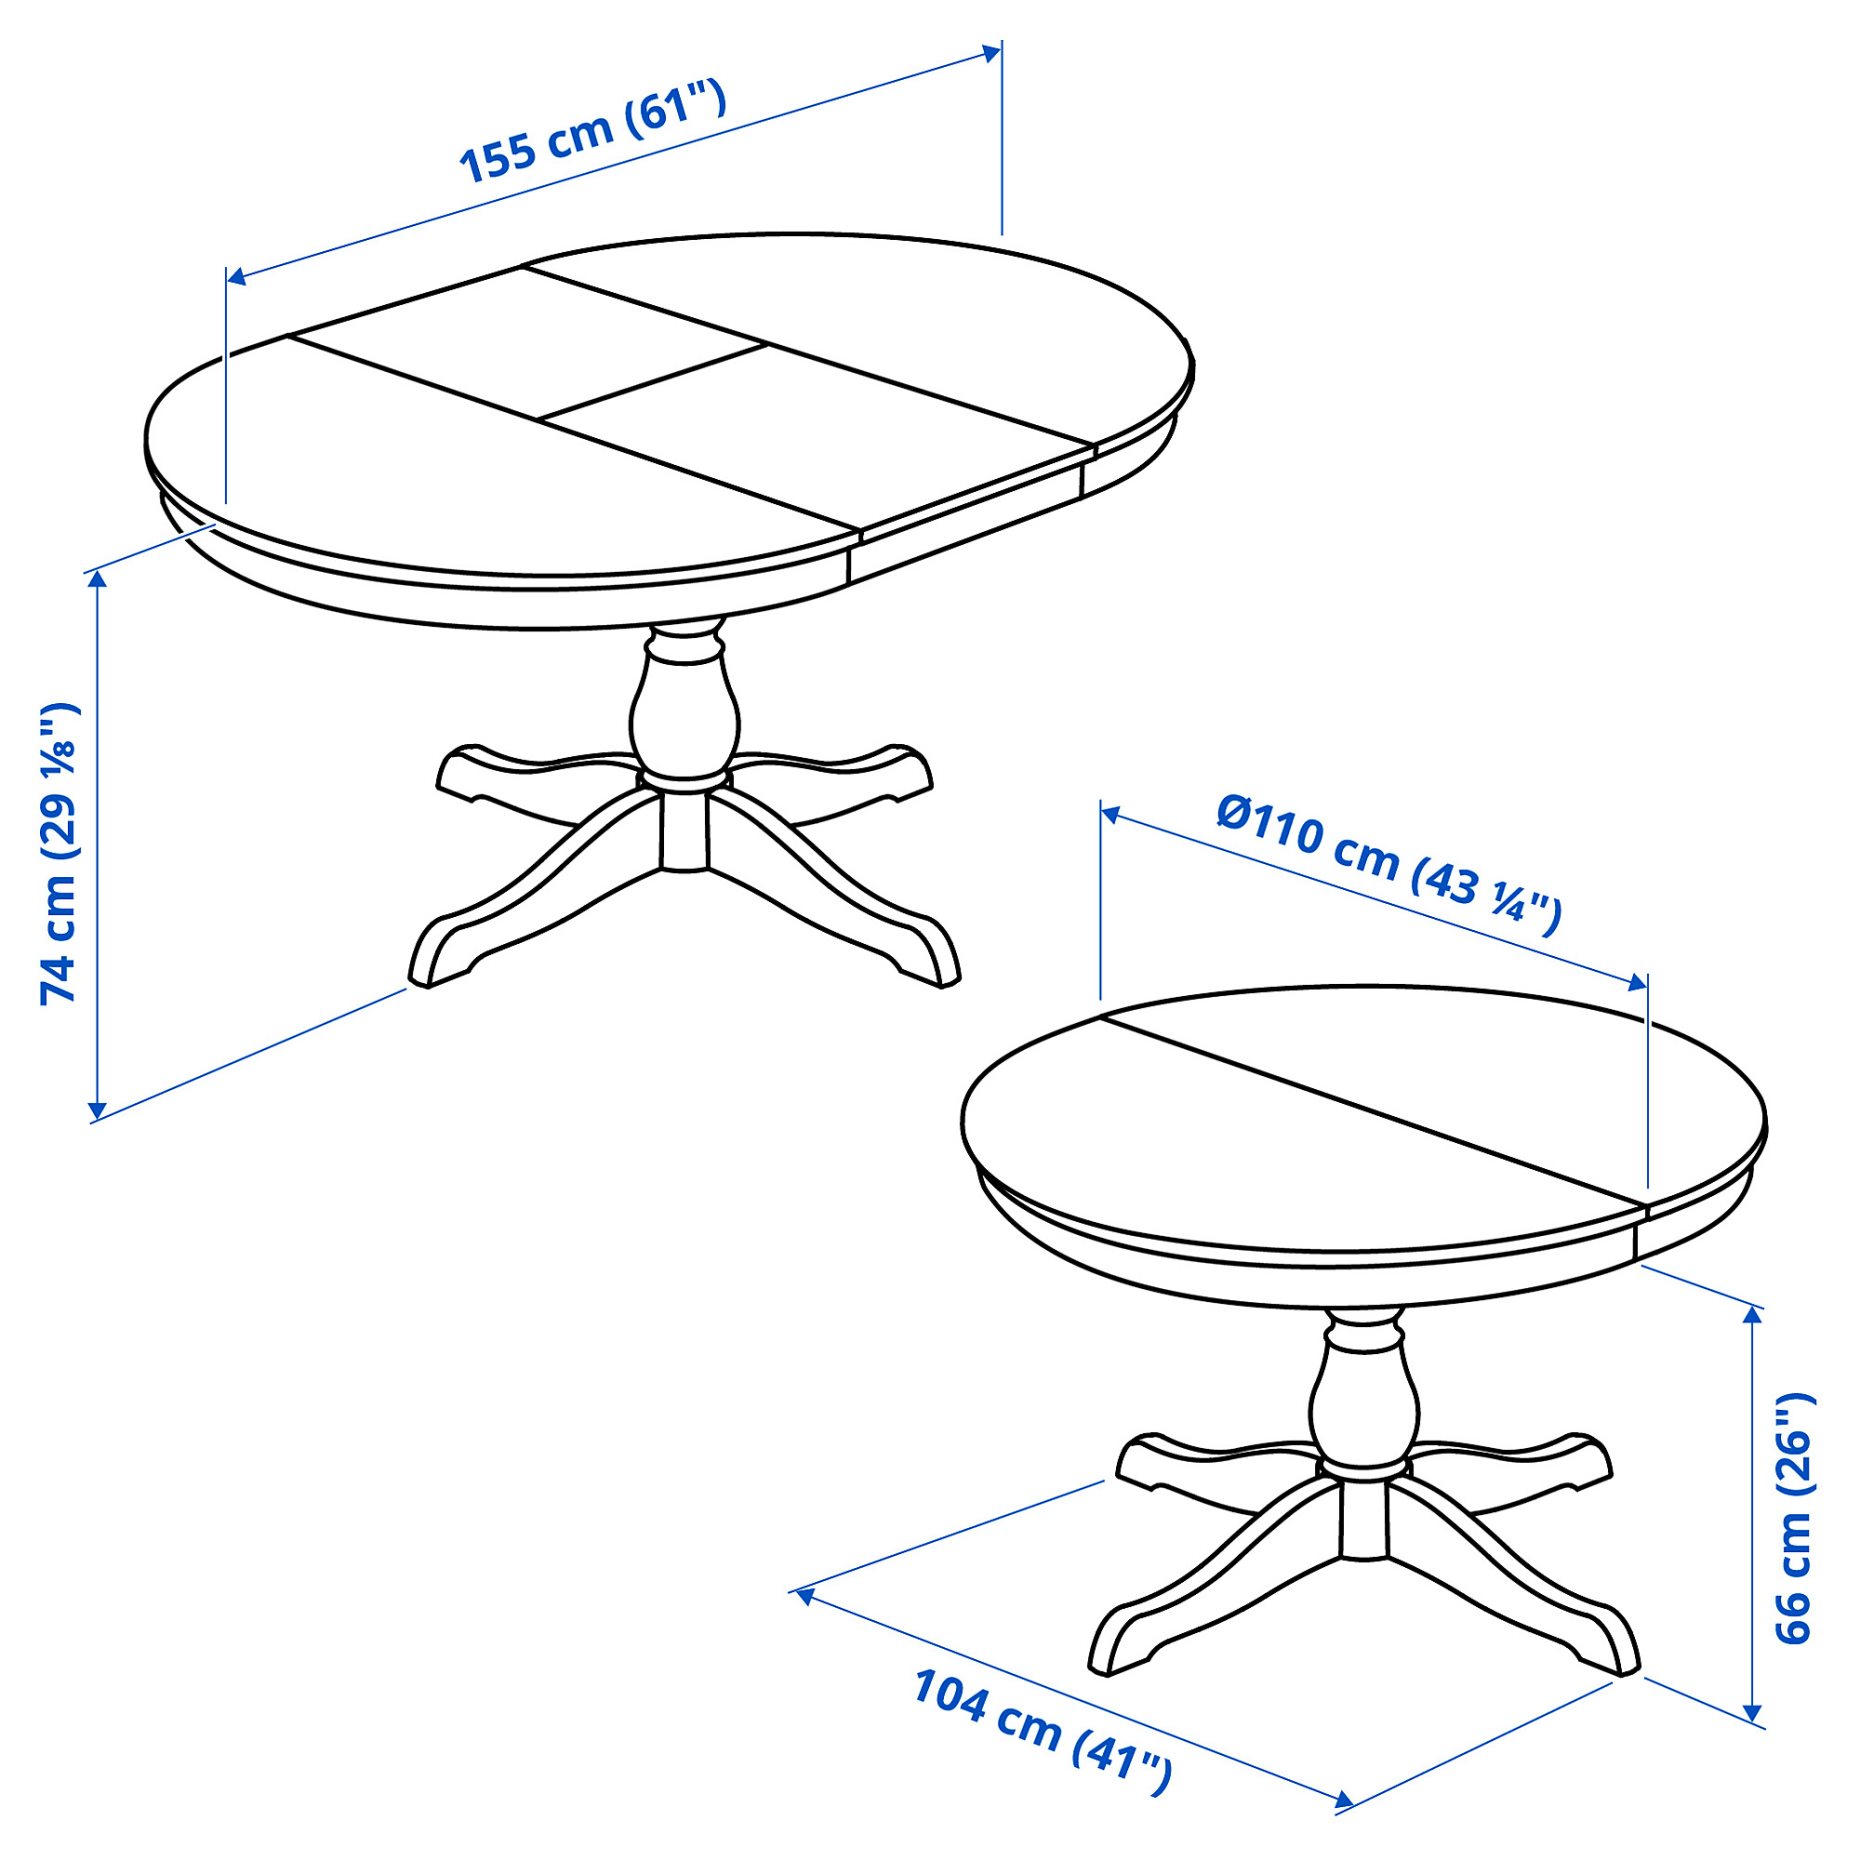 INGATORP/BERGMUND, τραπέζι και 4 καρέκλες, 110/155 cm, 794.289.52